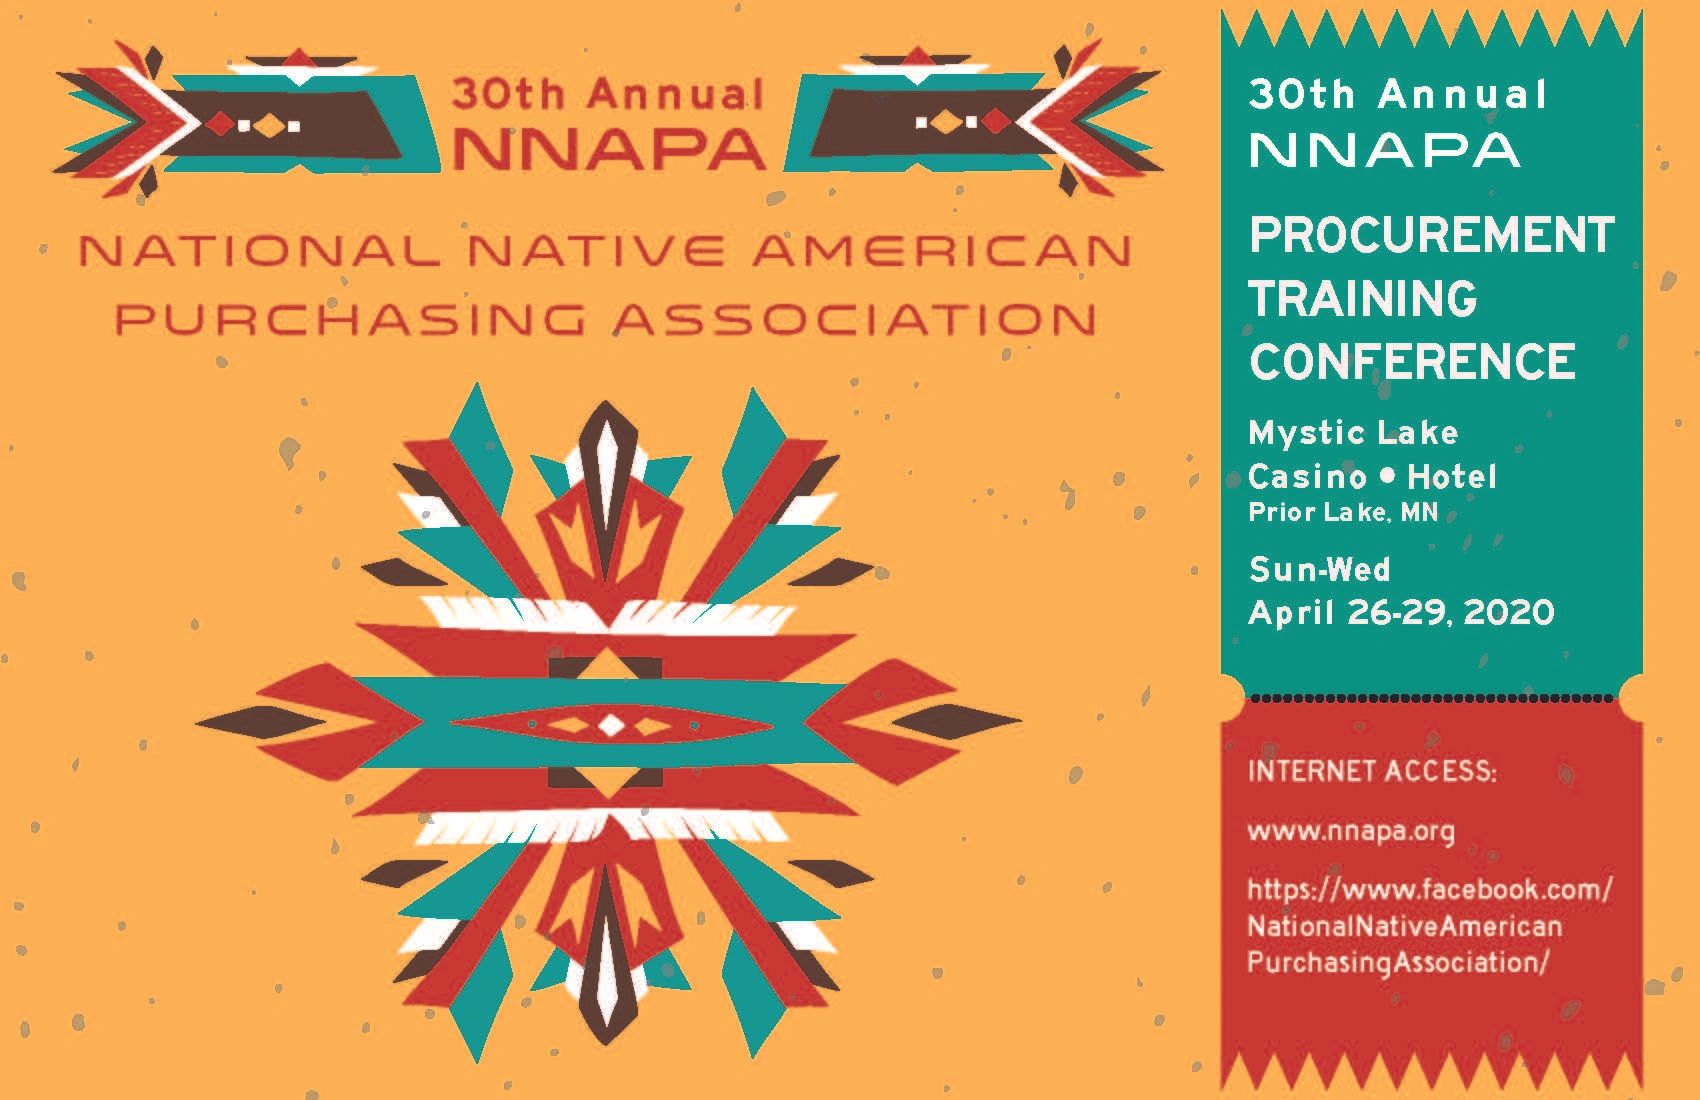 National Native American Purchasing Association National Native